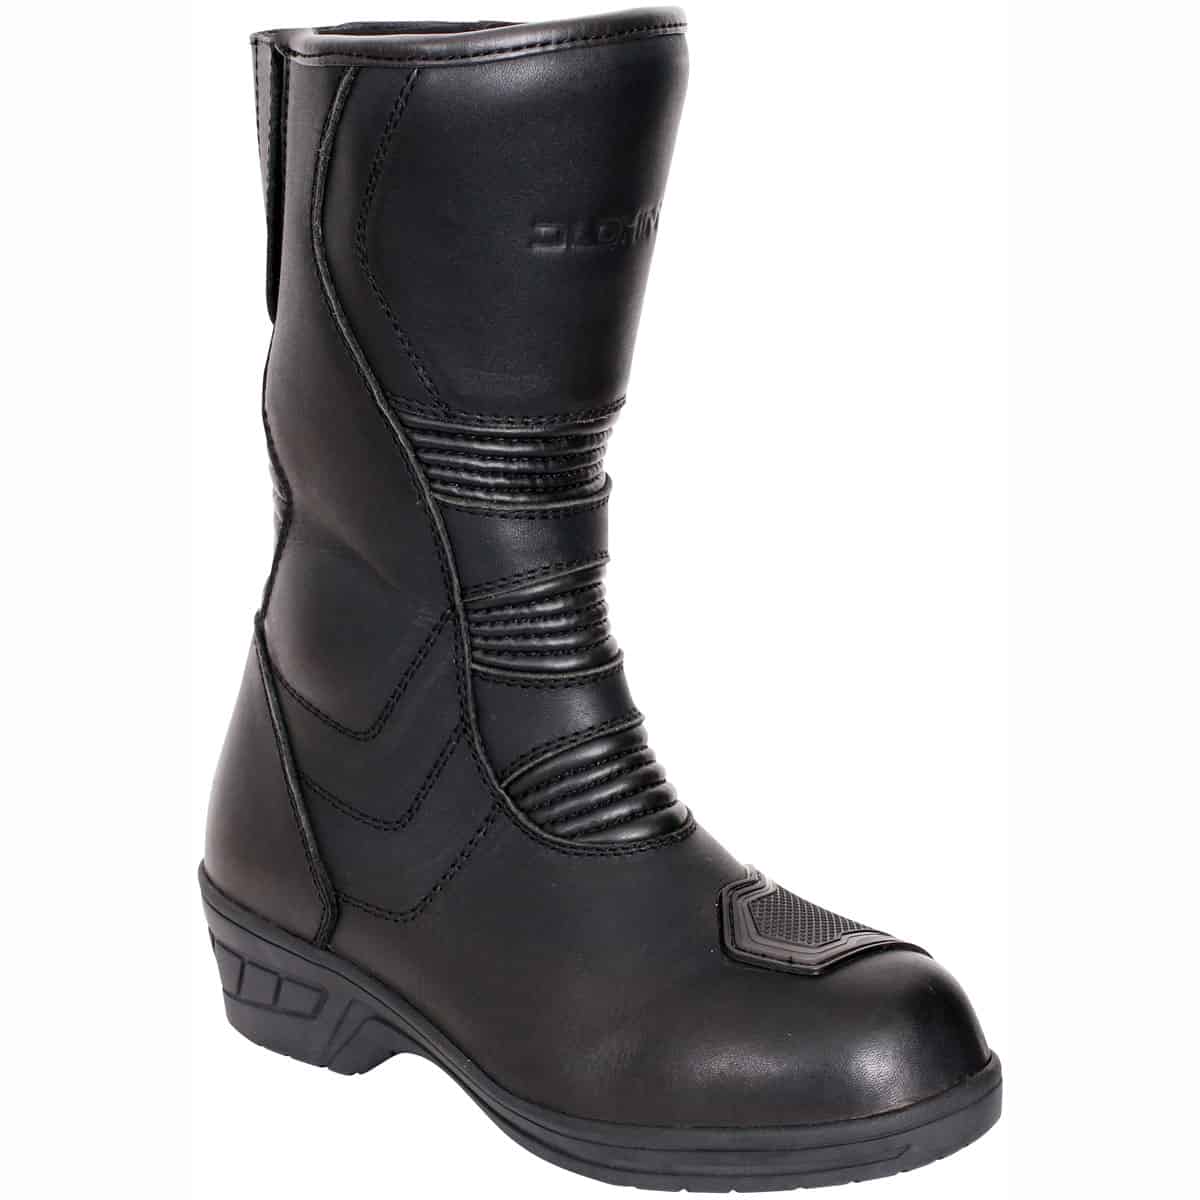 Duchinni Nebula Touring Boots Ladies WP - Black 3